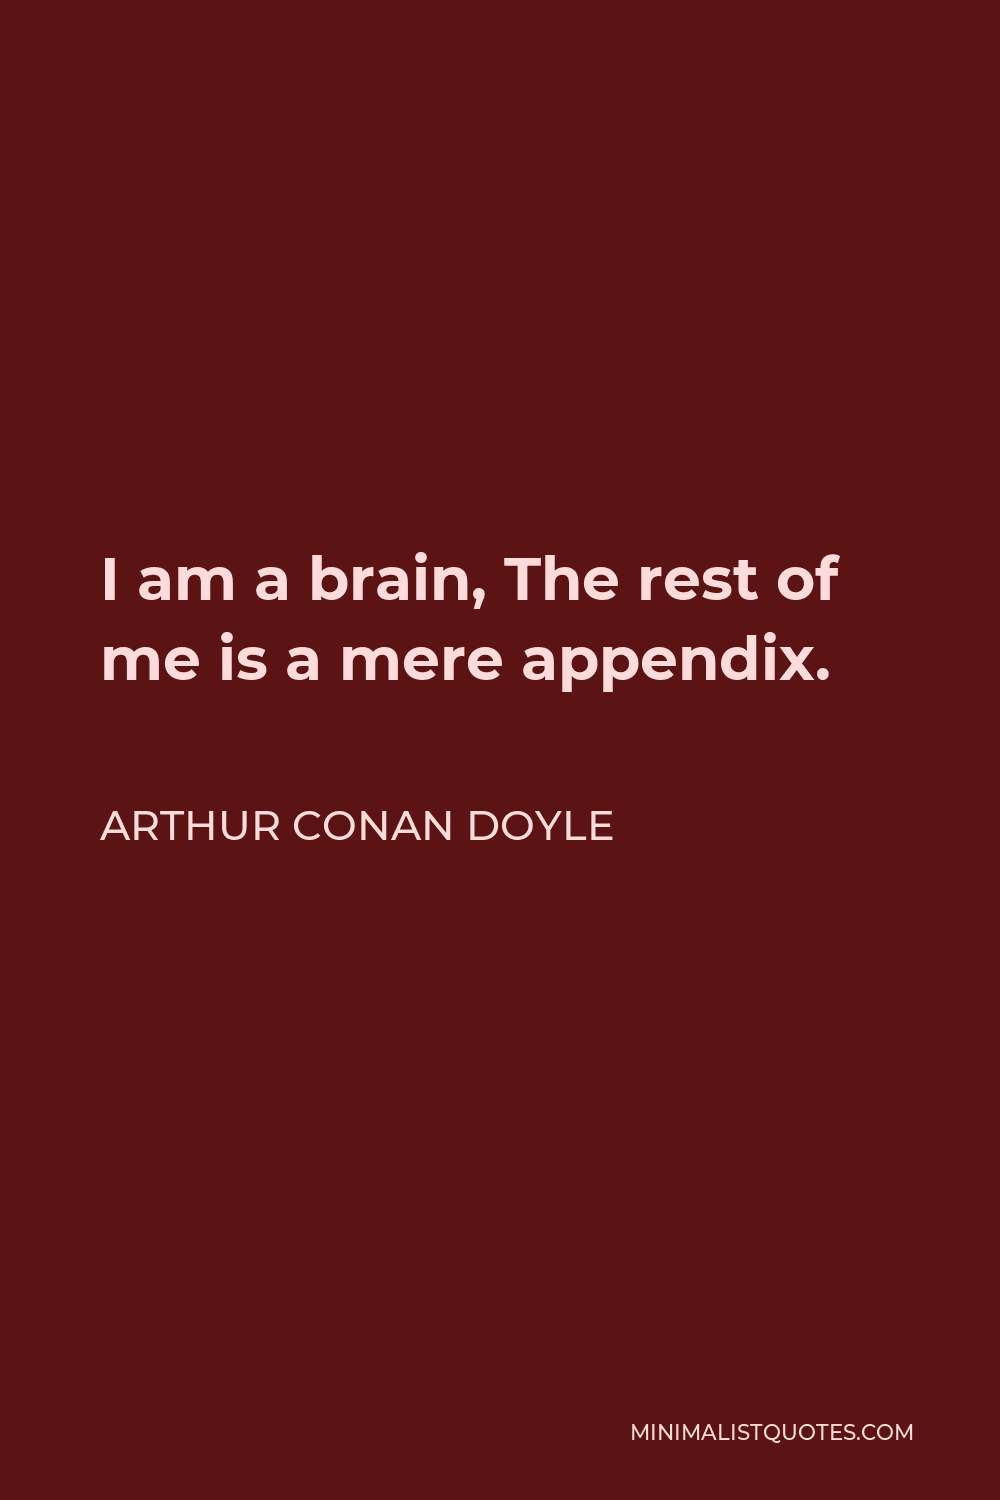 Arthur Conan Doyle Quote - I am a brain, The rest of me is a mere appendix.